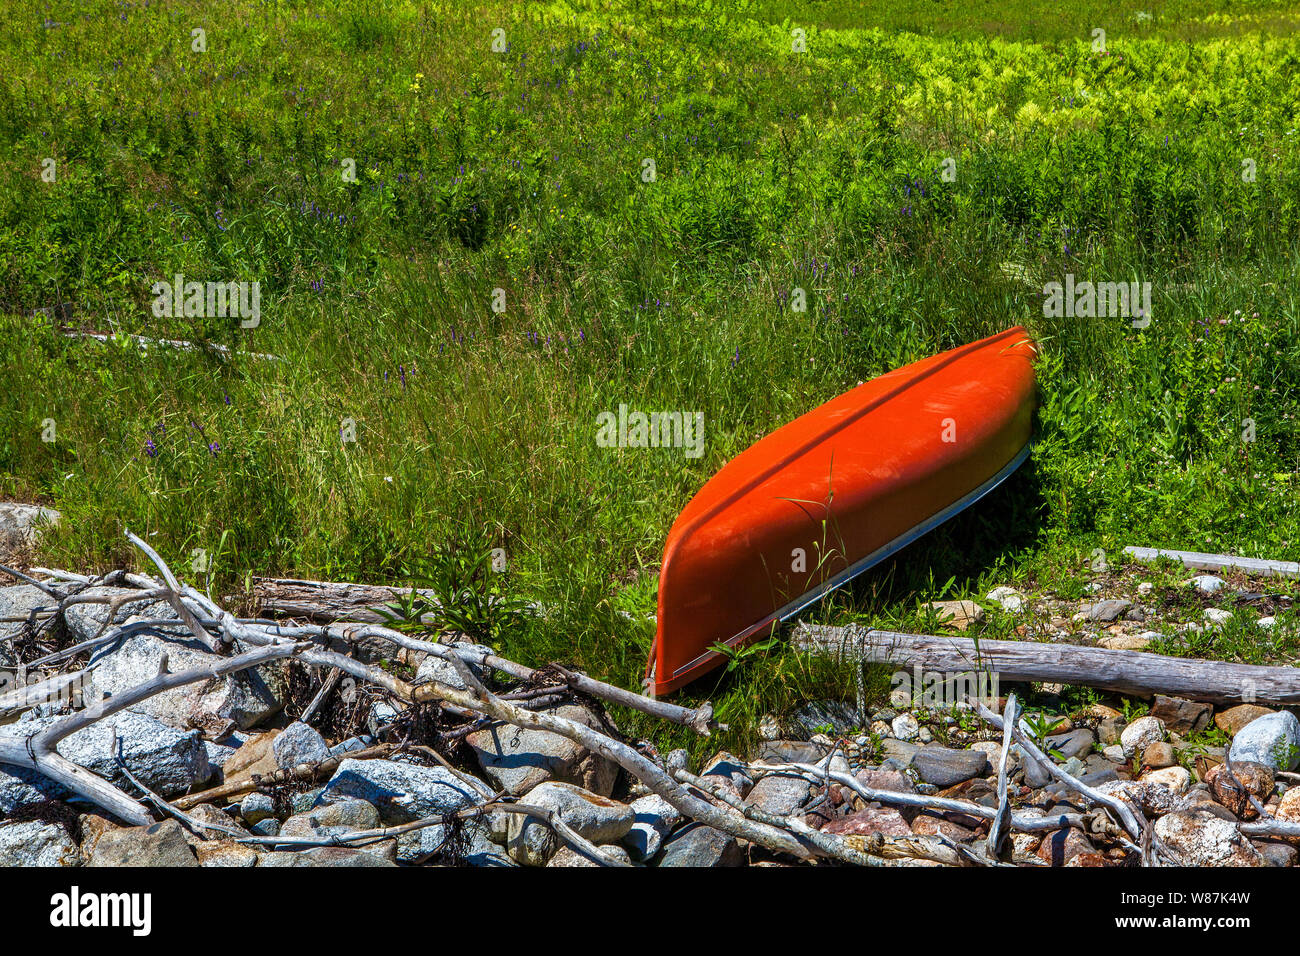 A red-orange upside down canoe sits beside a rocky shorline in a green, grassy field. Stock Photo